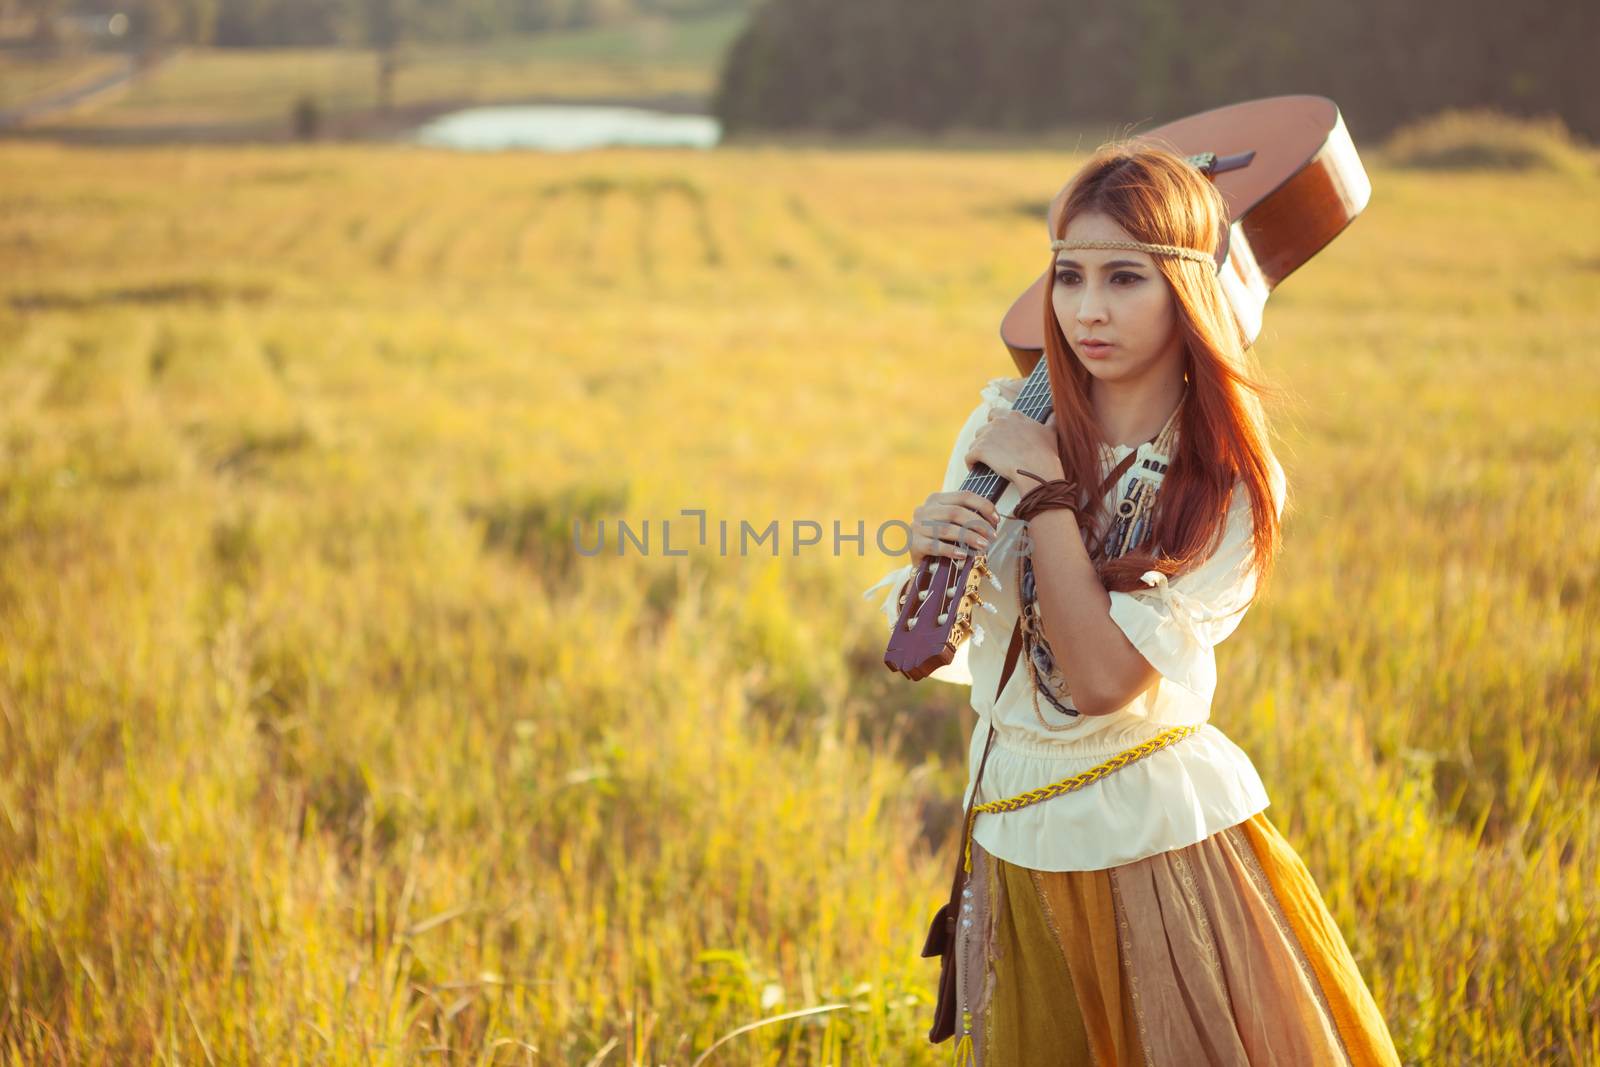 Hippie woman walking in golden field with acoustic guitar